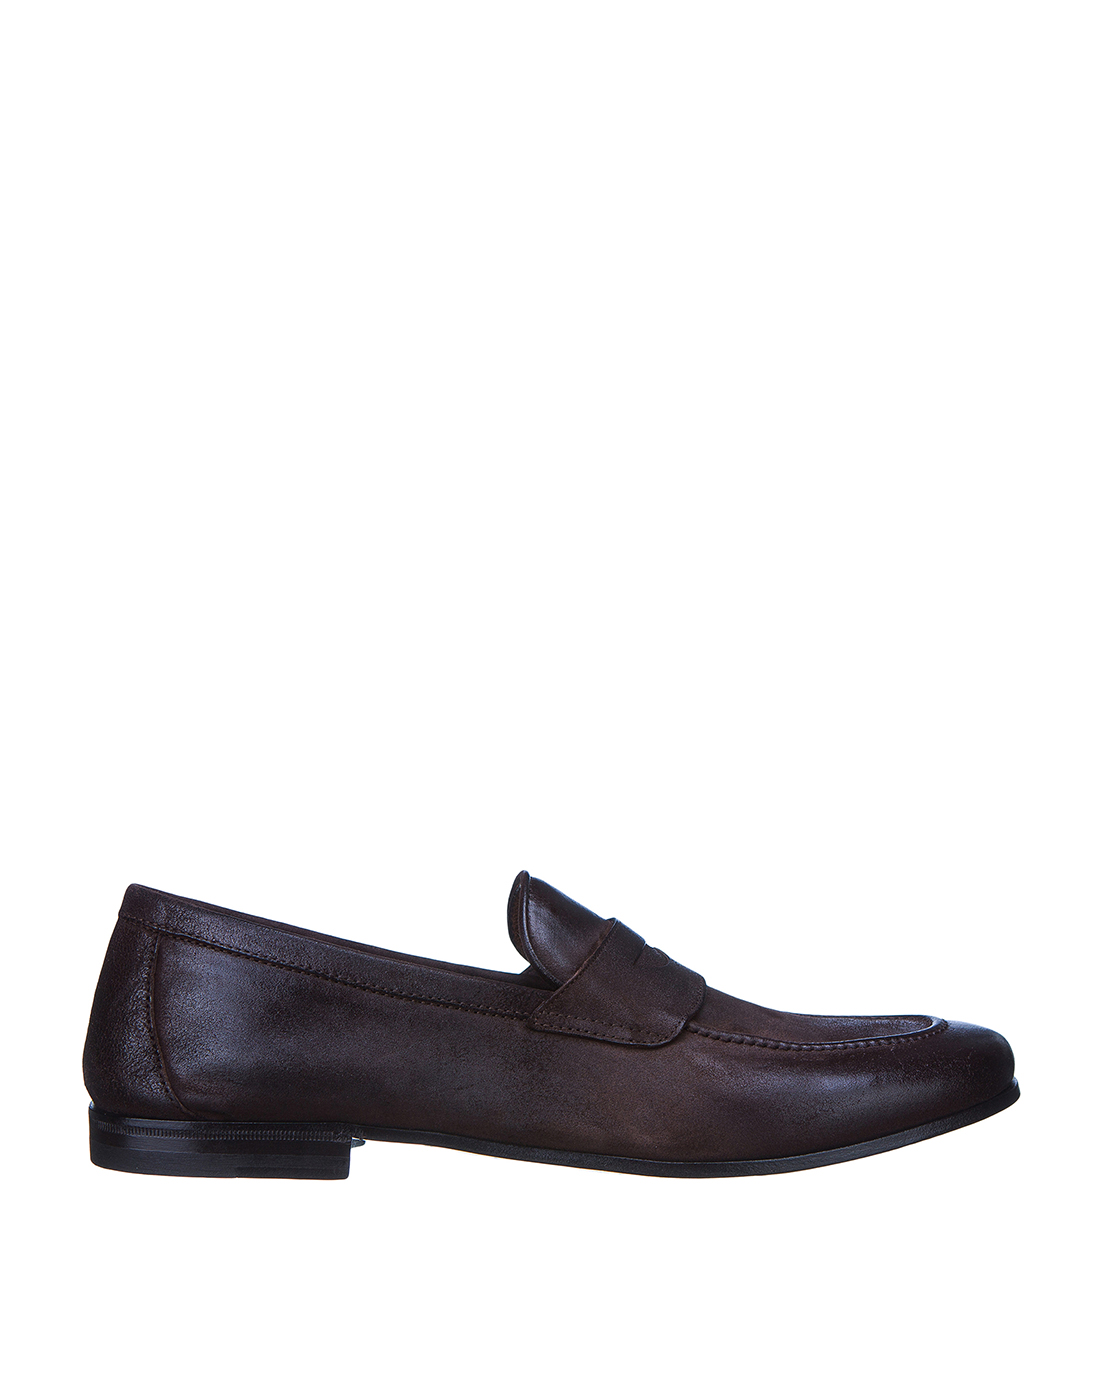 Туфли темно-коричневые мужские  Henderson S70415.1-1